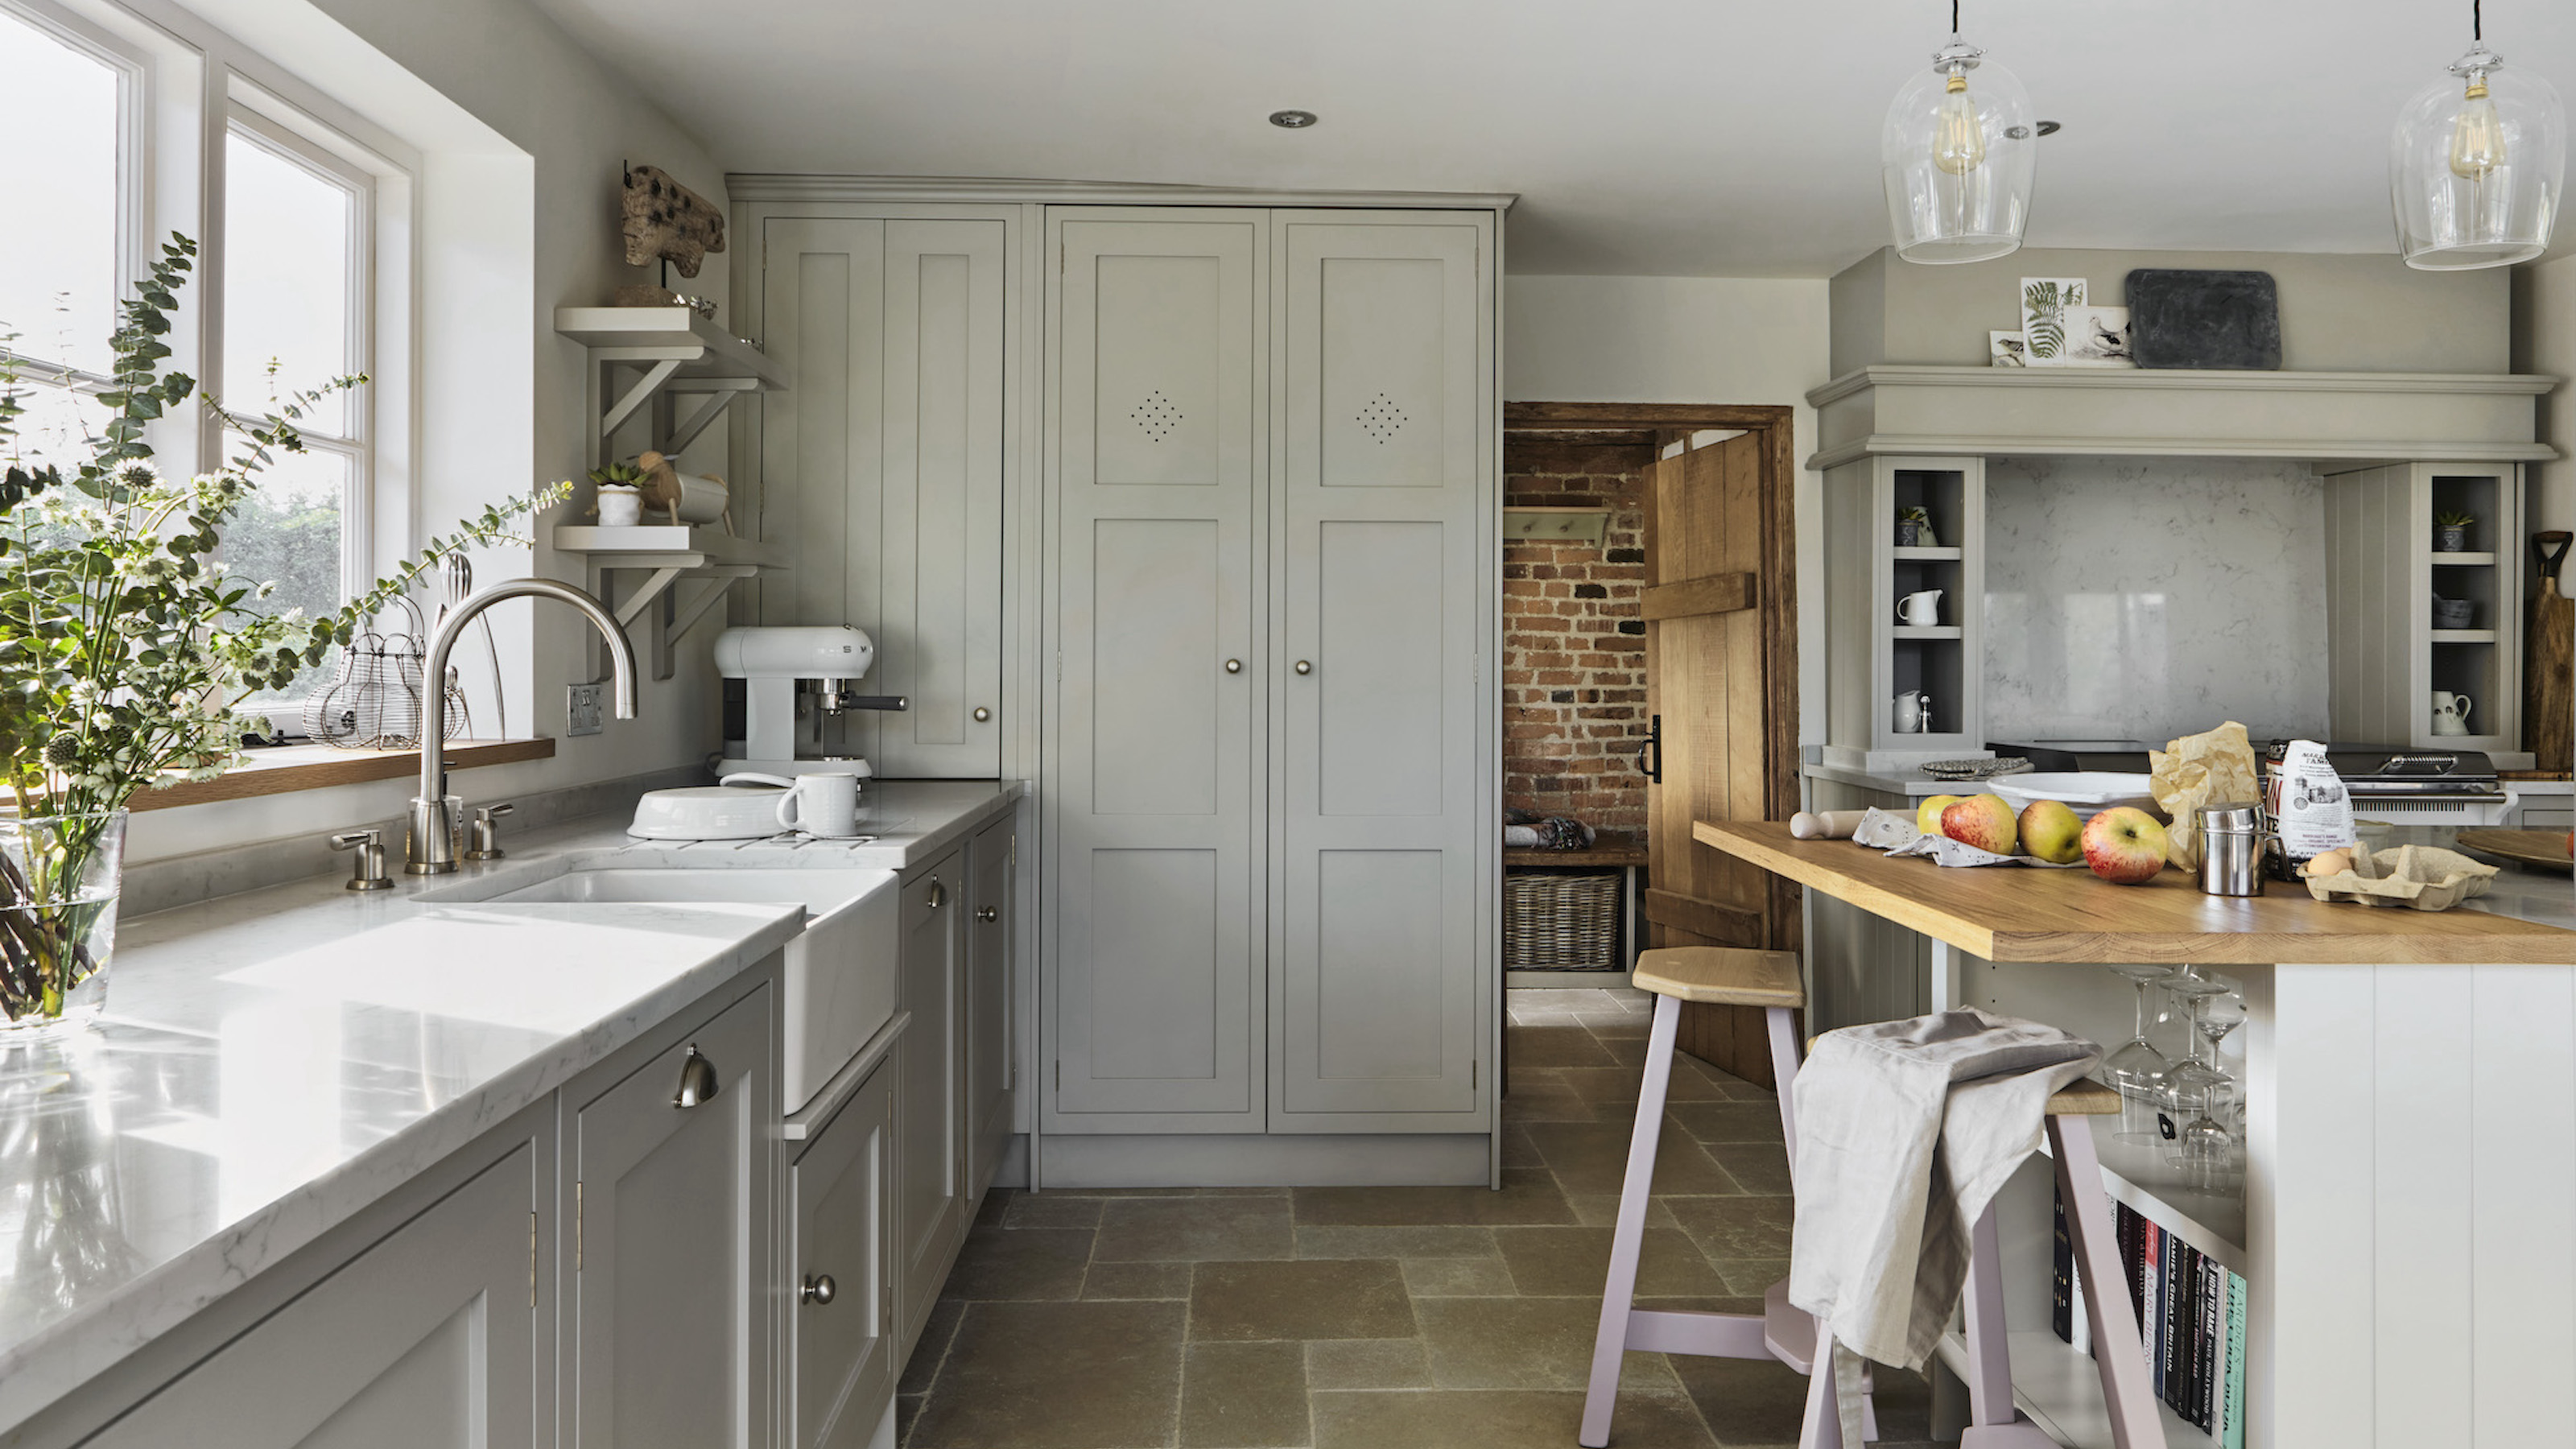 Cottage kitchen ideas 20 pretty ways to decorate homey spaces ...